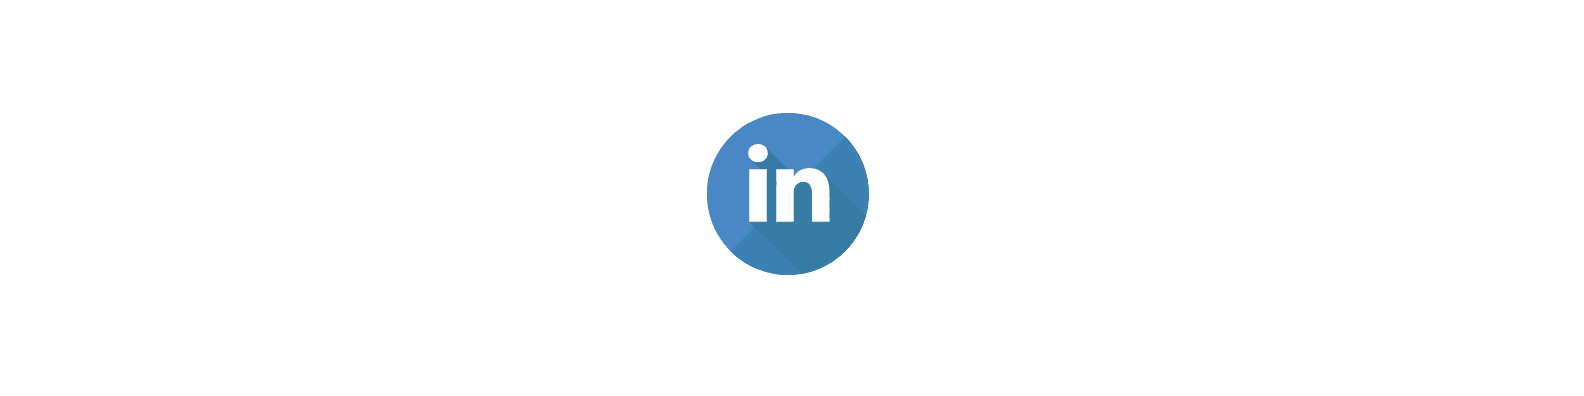 Intro_LinkedIn